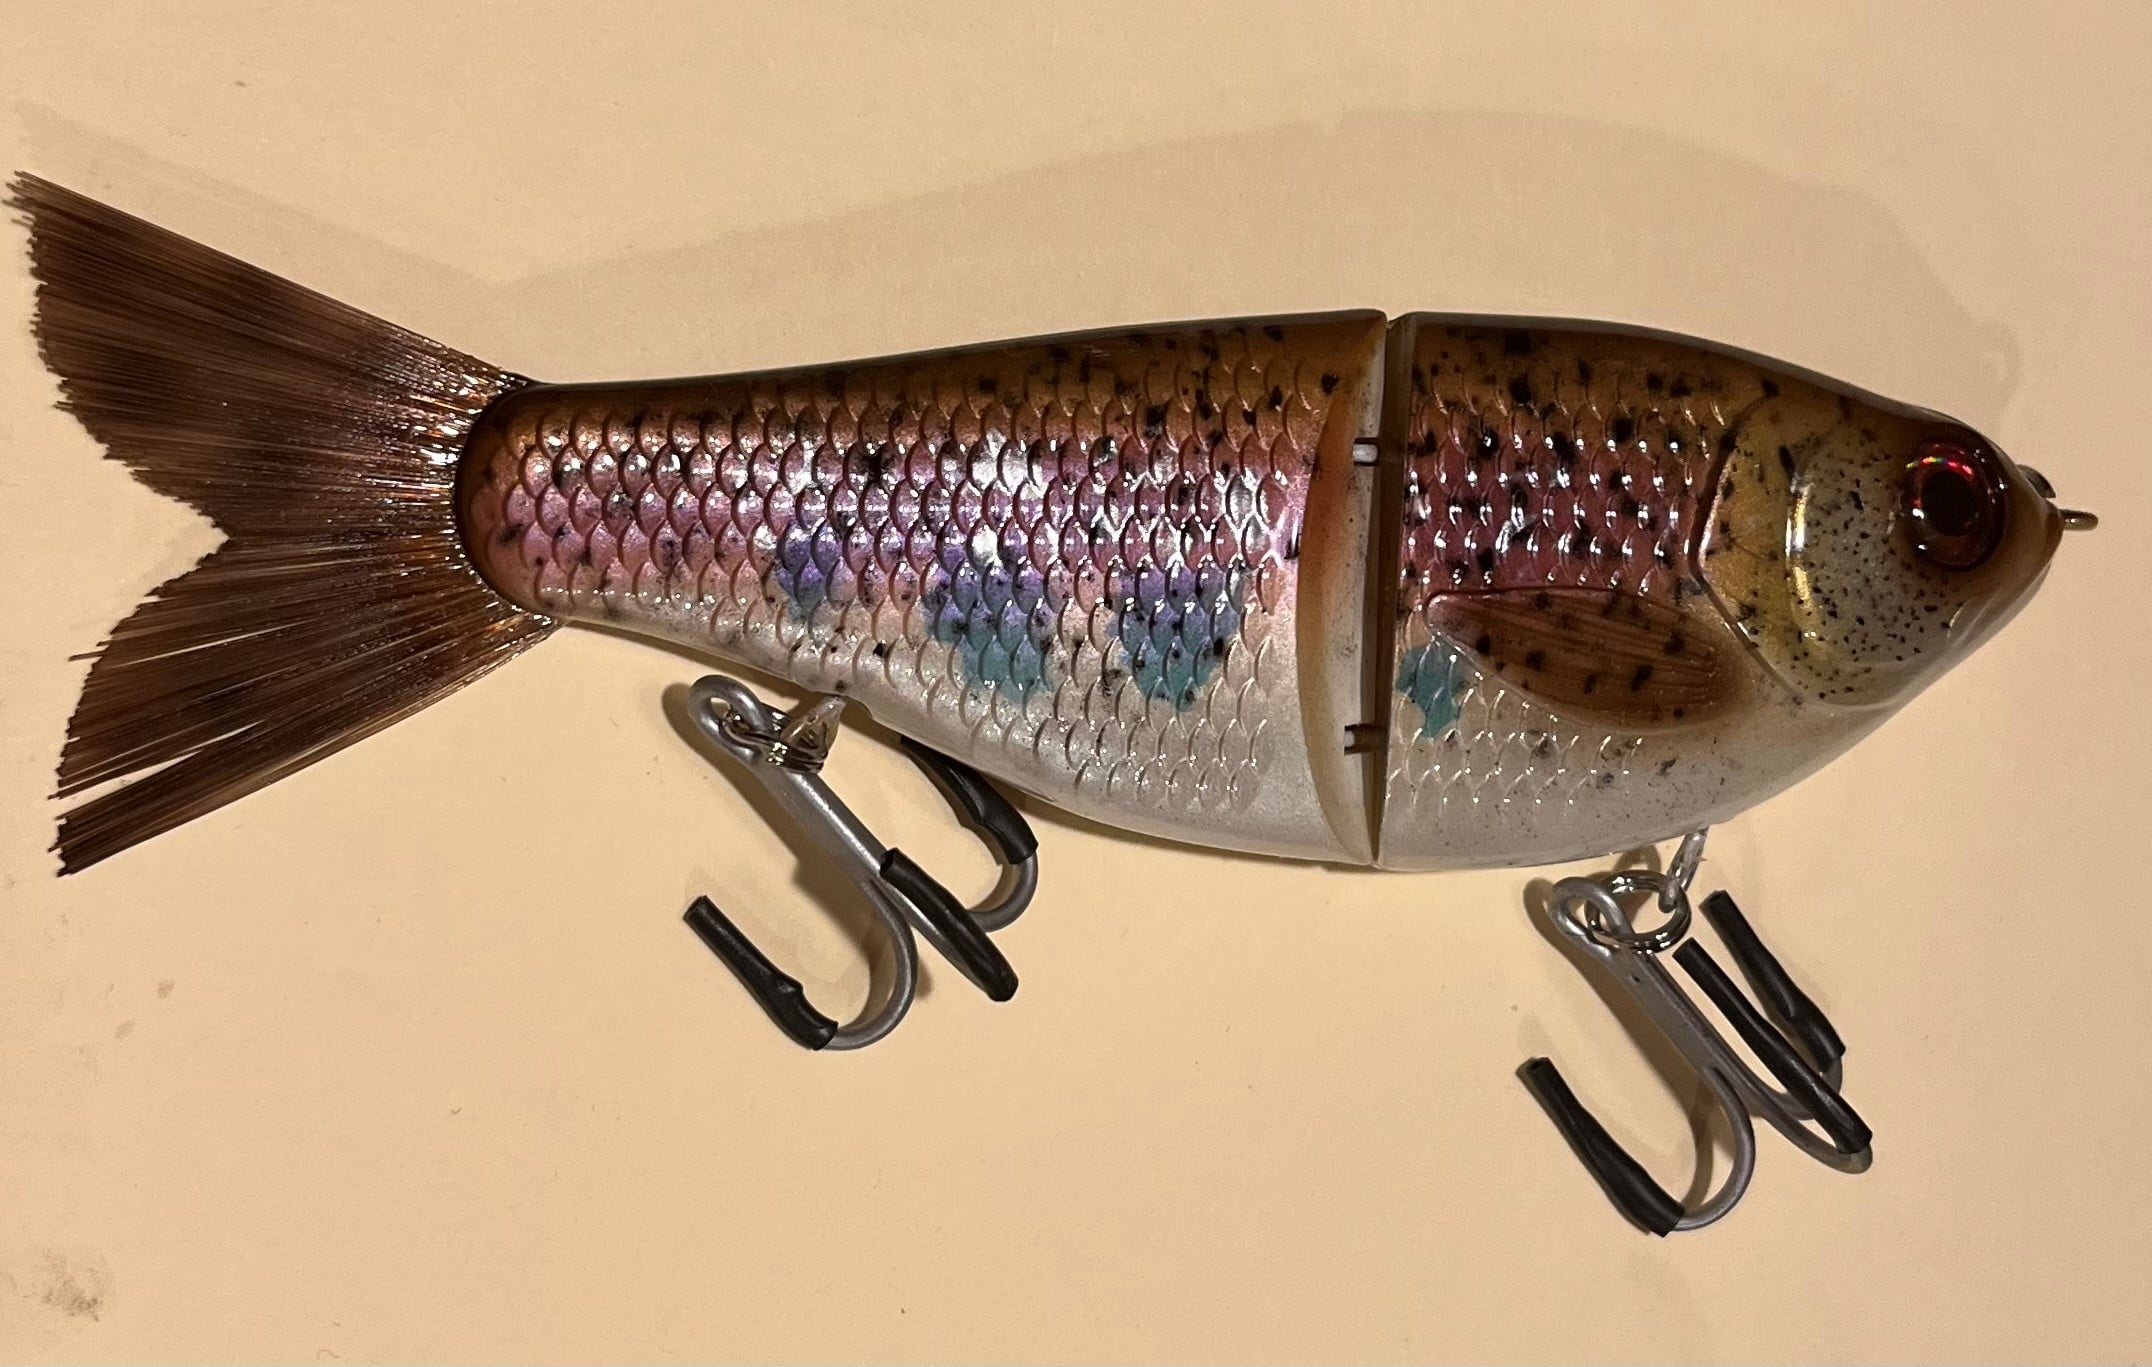 Lifelike Fishing Lures for Bass, Trout, Walleye, Predator Fish